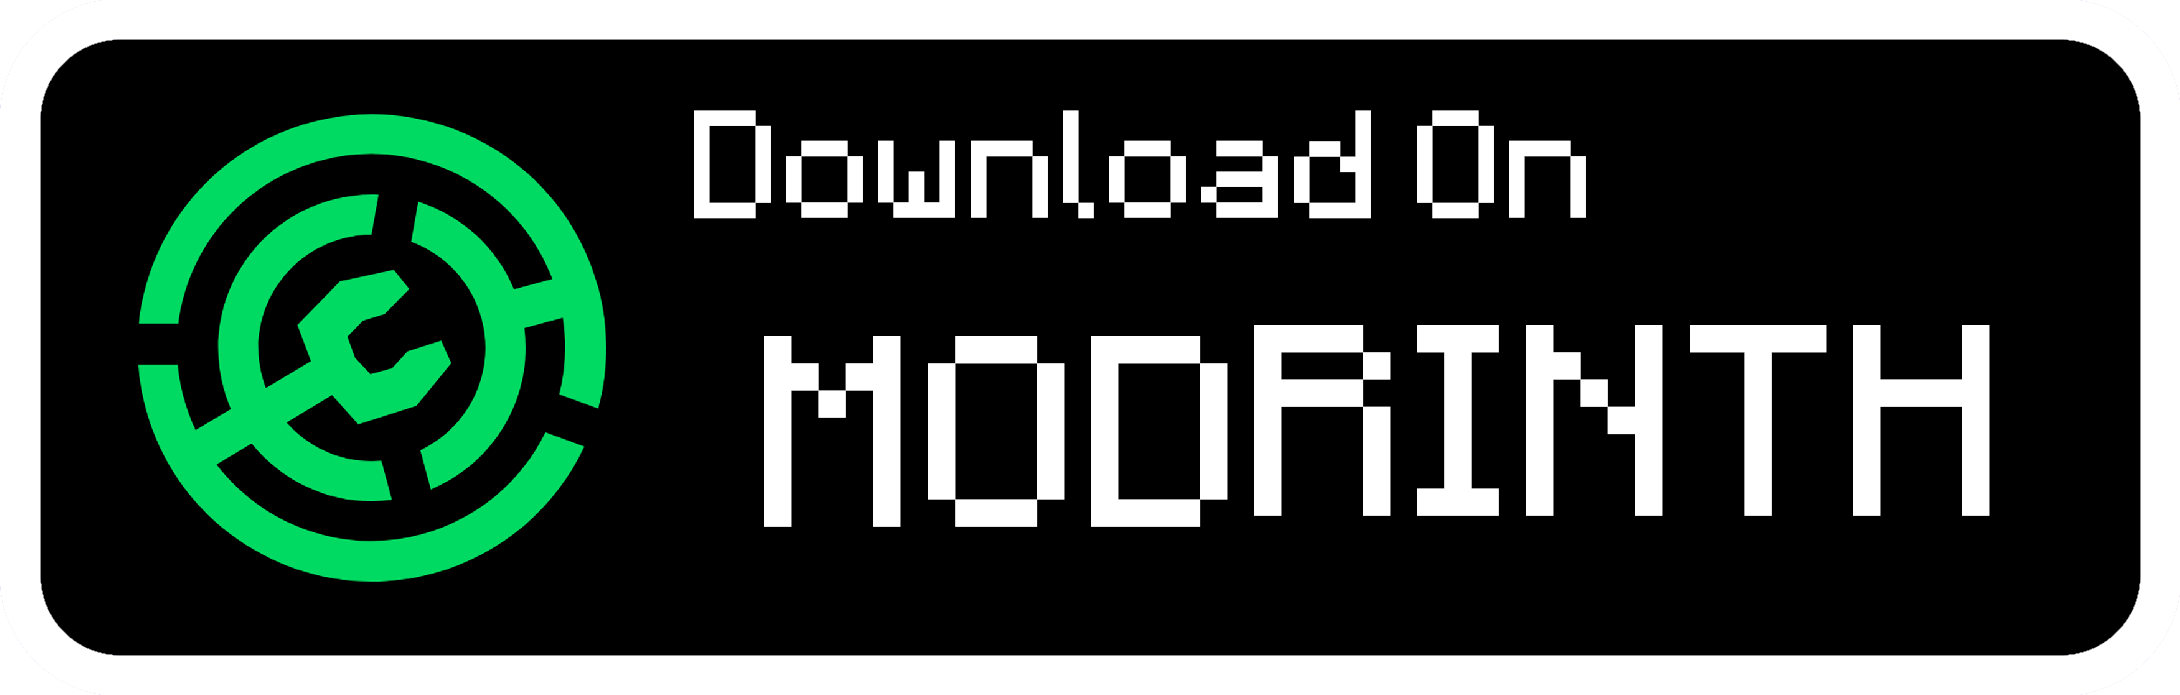 Download it on Modrinth